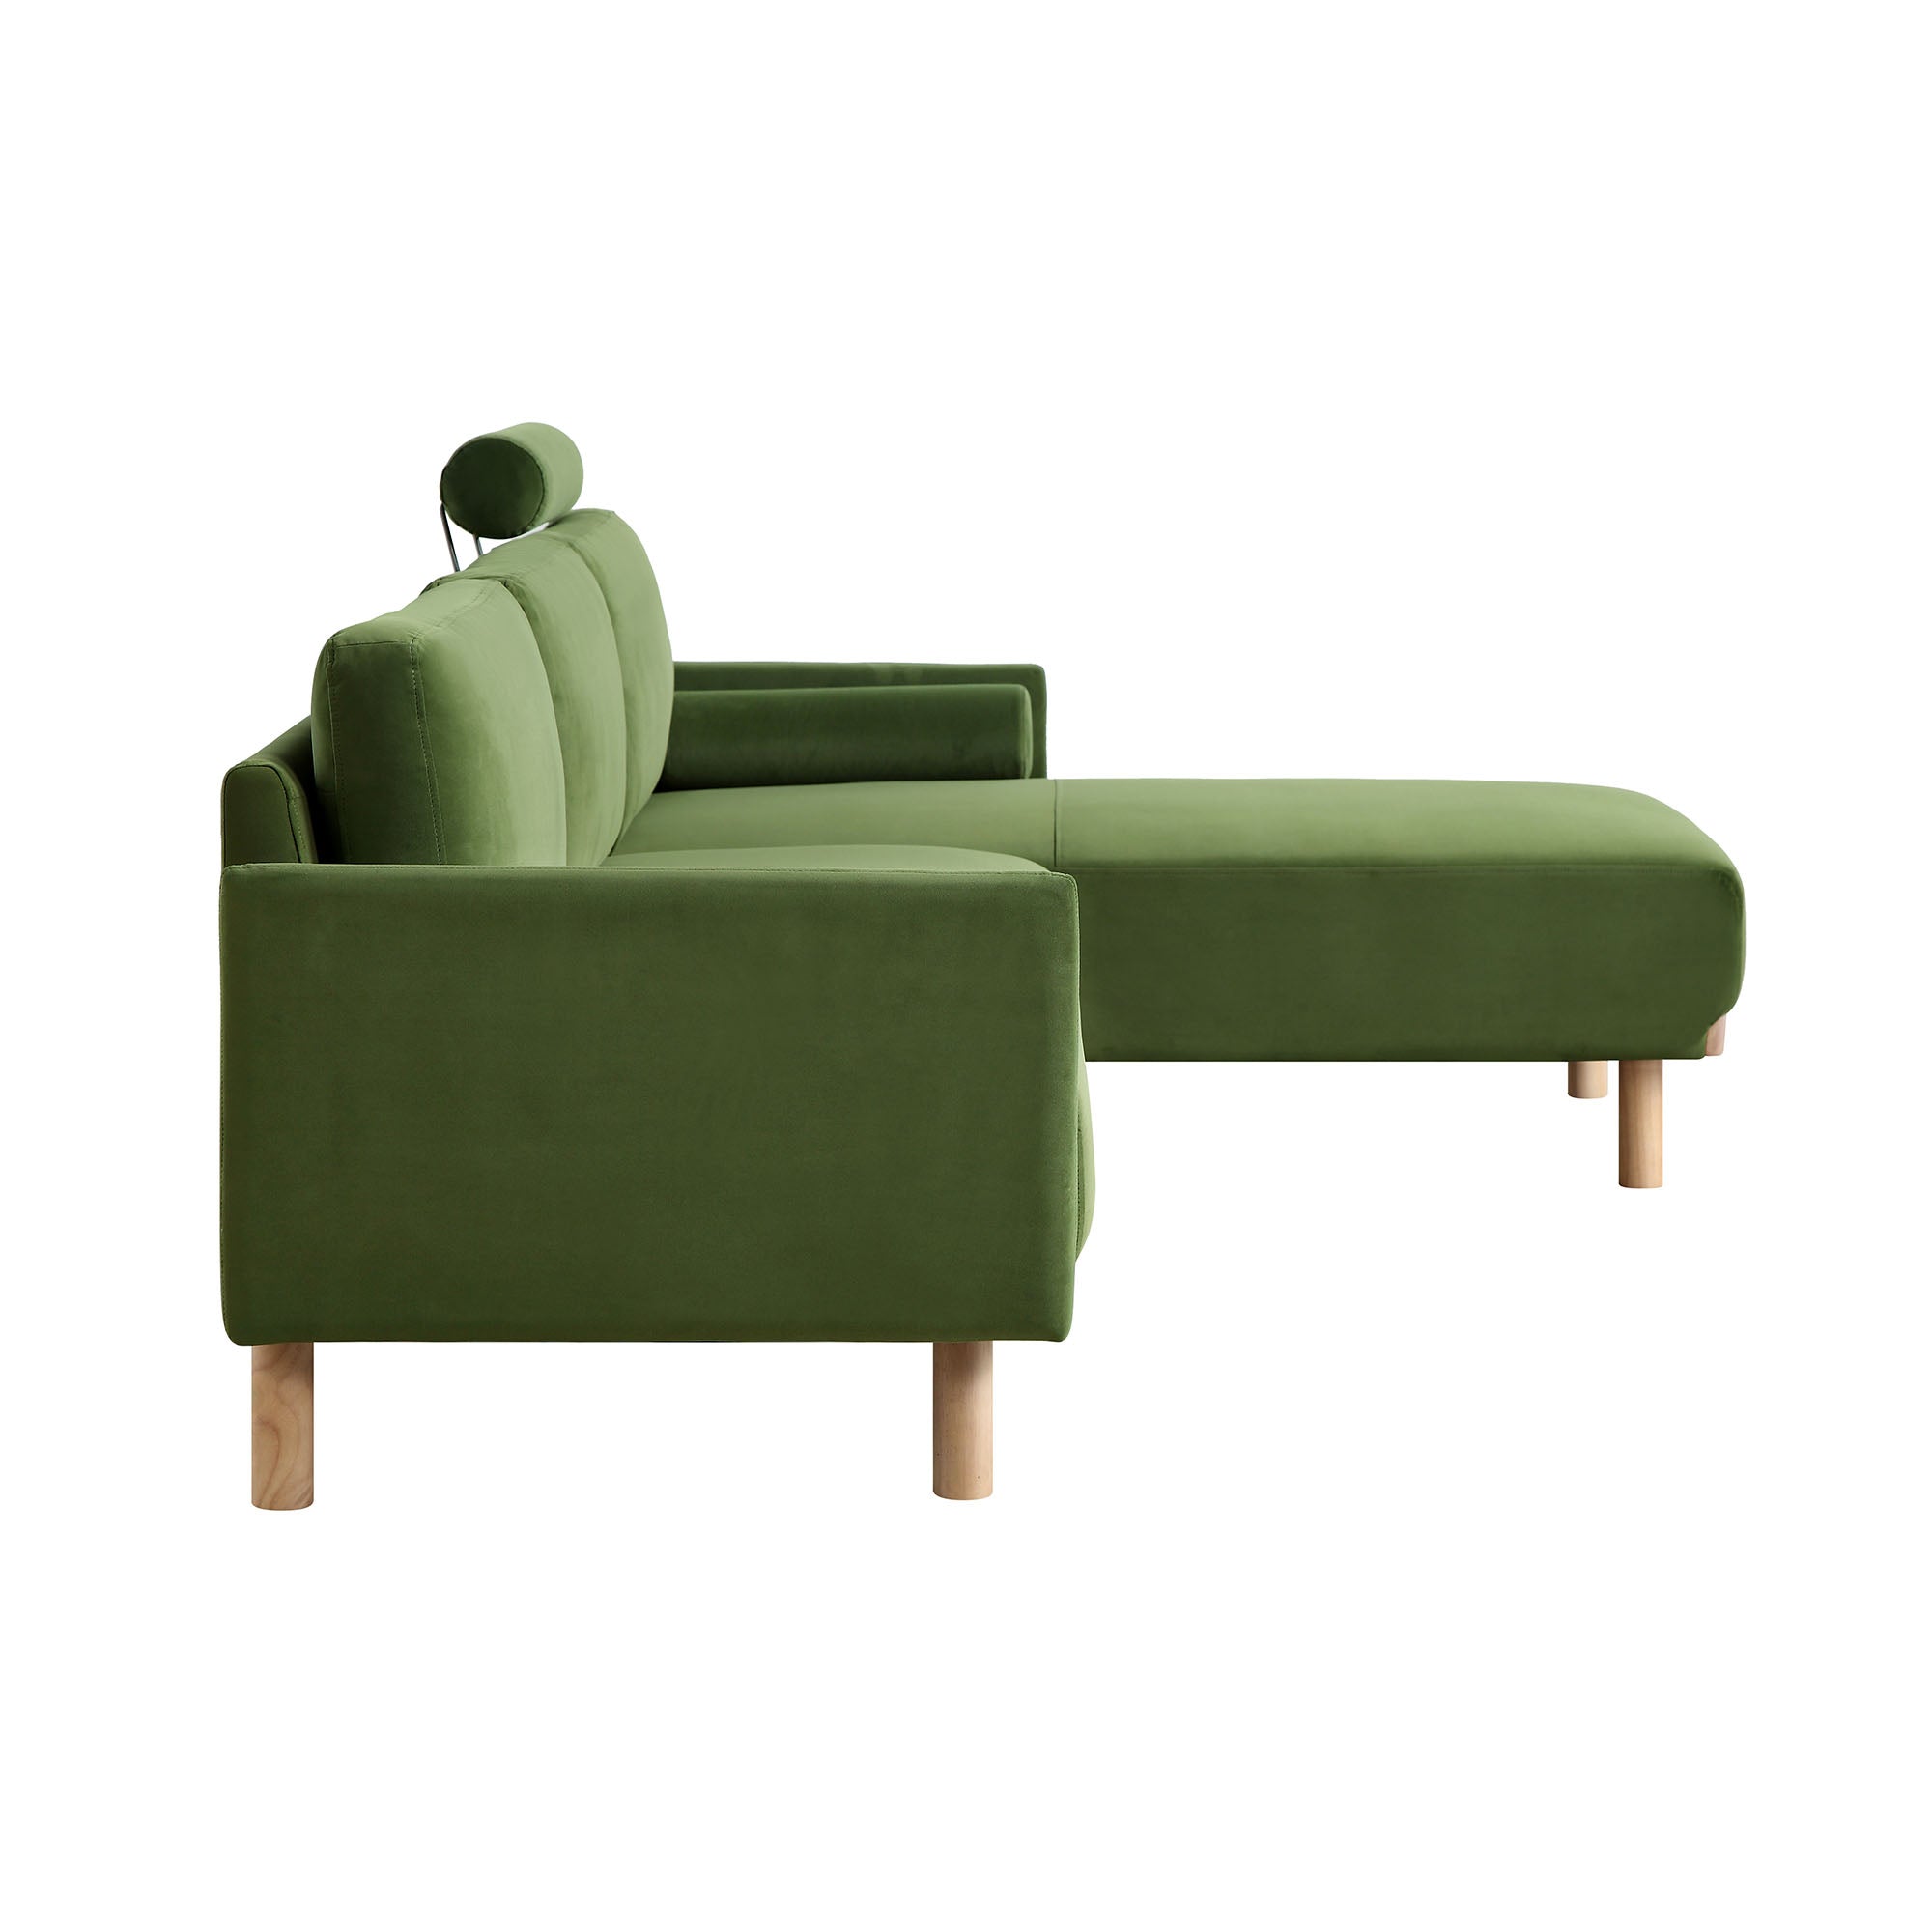 Timber Fern Green Velvet Sofa, Large 3-Seater Chaise Sofa Right Hand